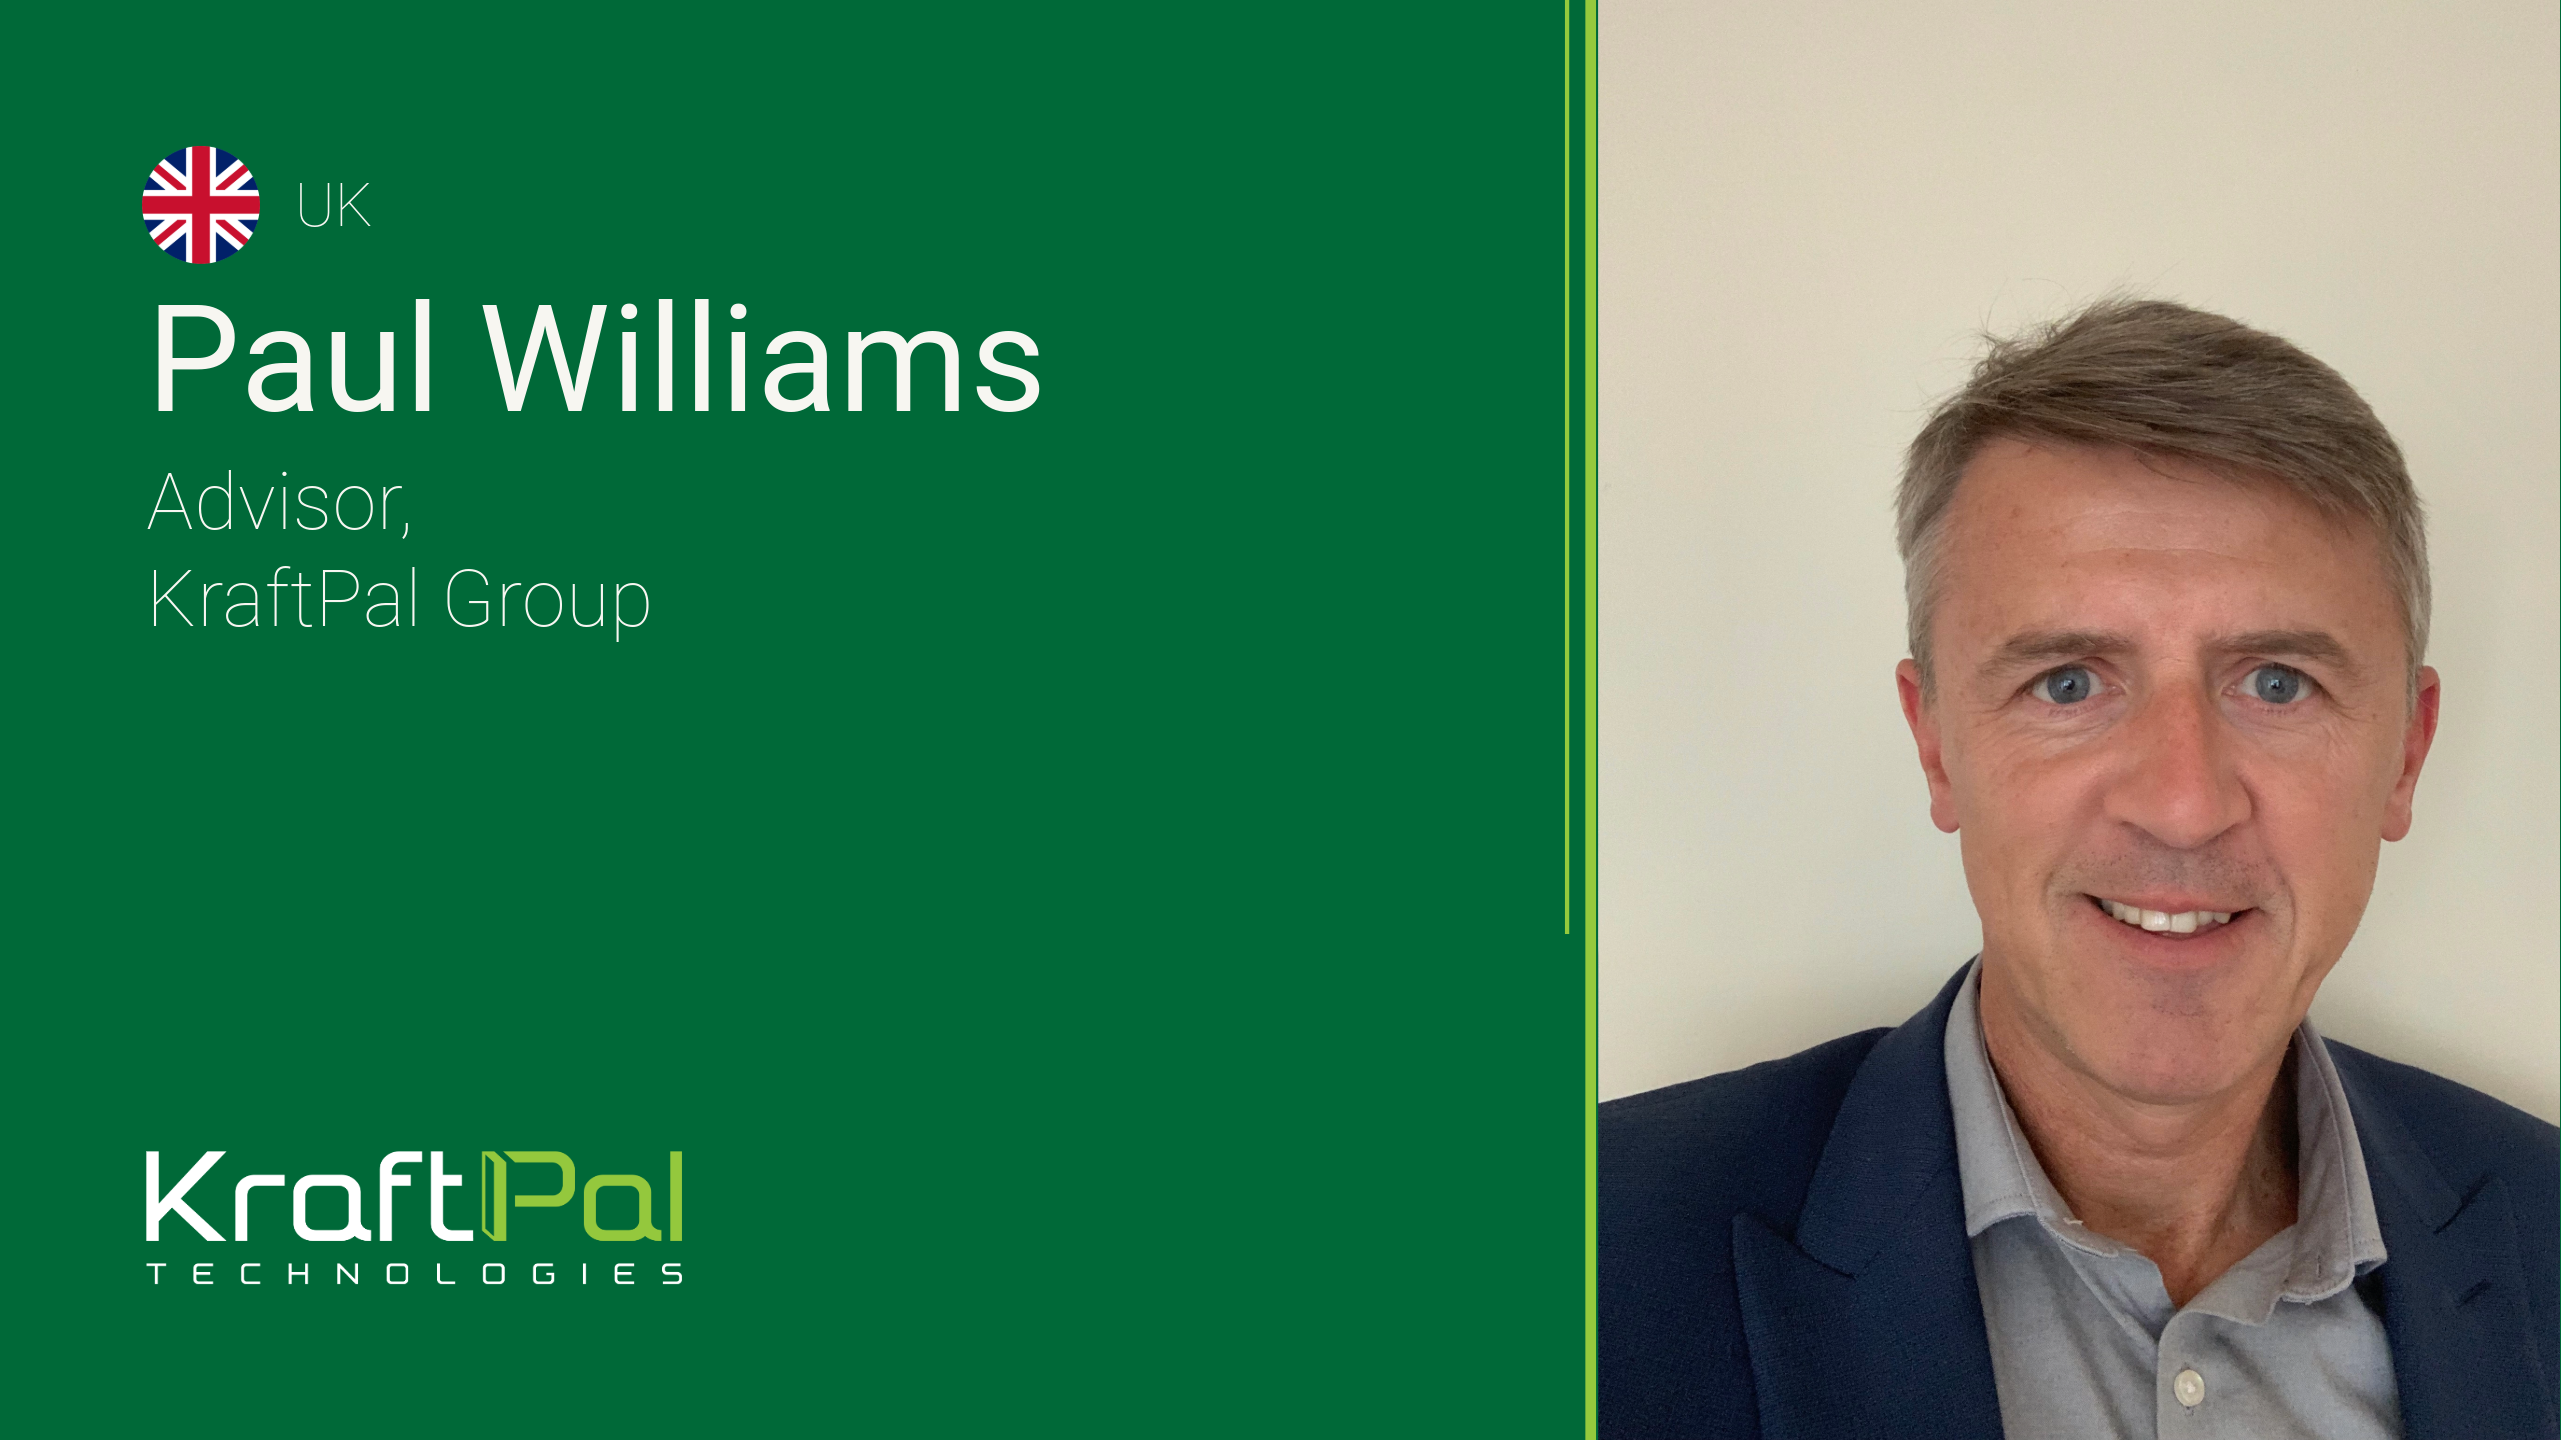 KraftPal Announces Paul Williams as New Advisor